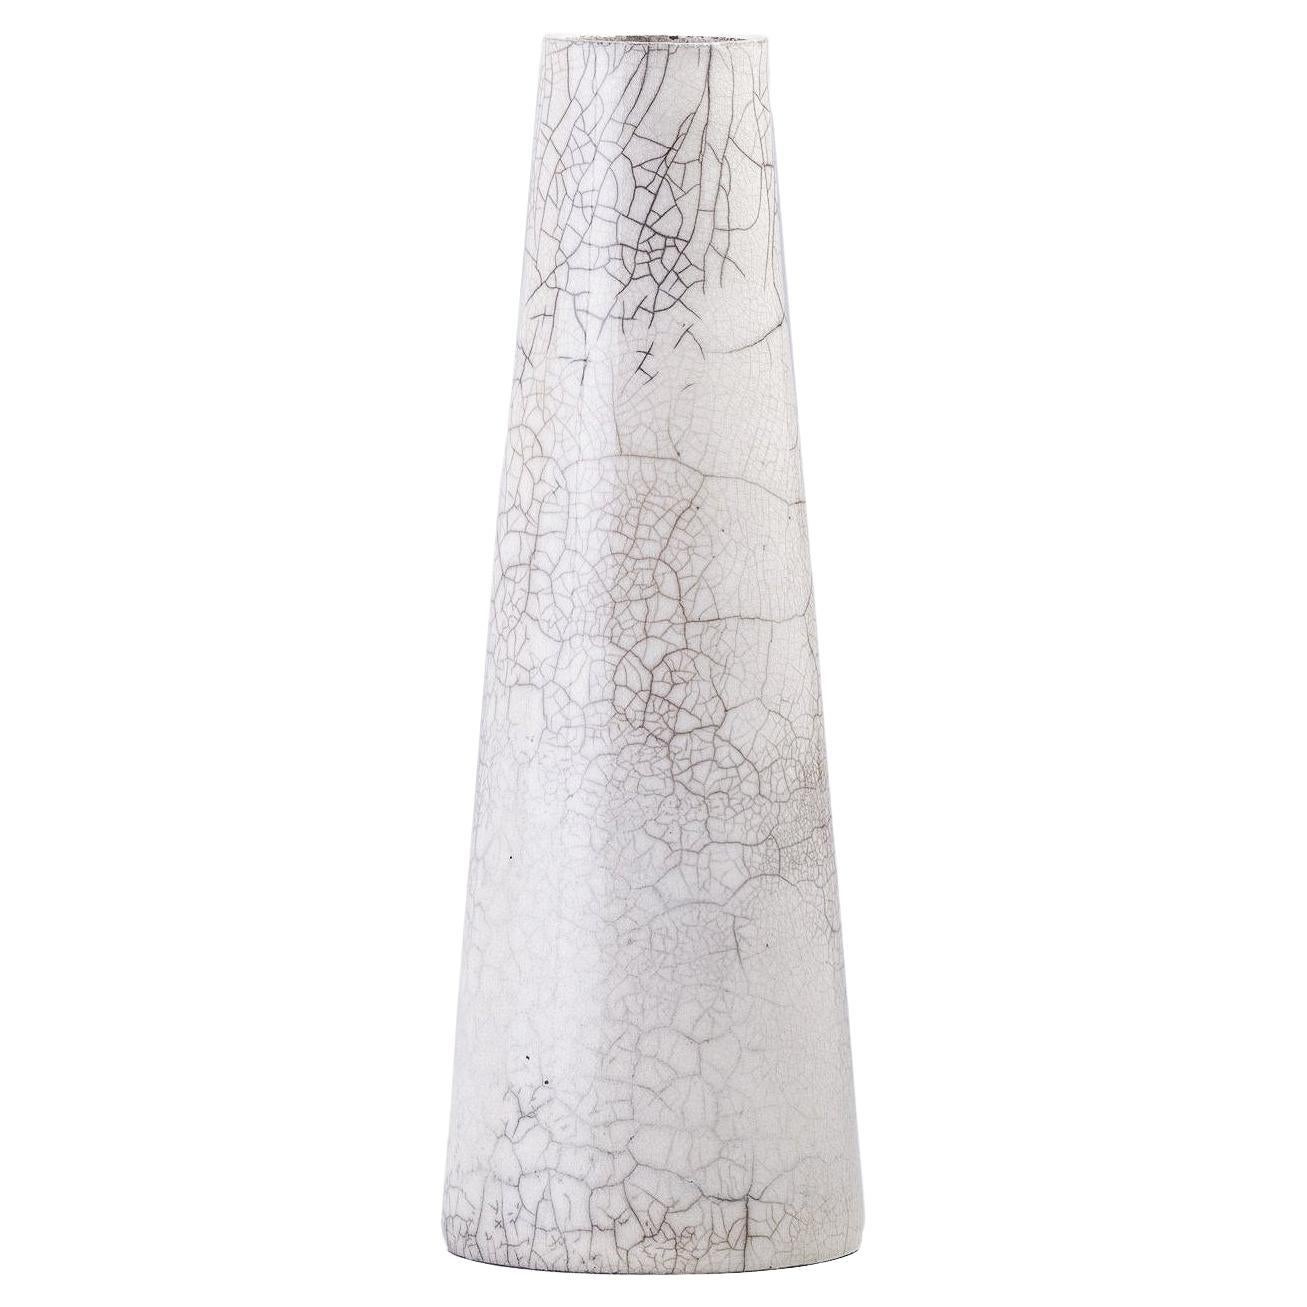 Japanese Modern Minimalist LAAB Hana Vertical Vase Raku Ceramic White Crakle